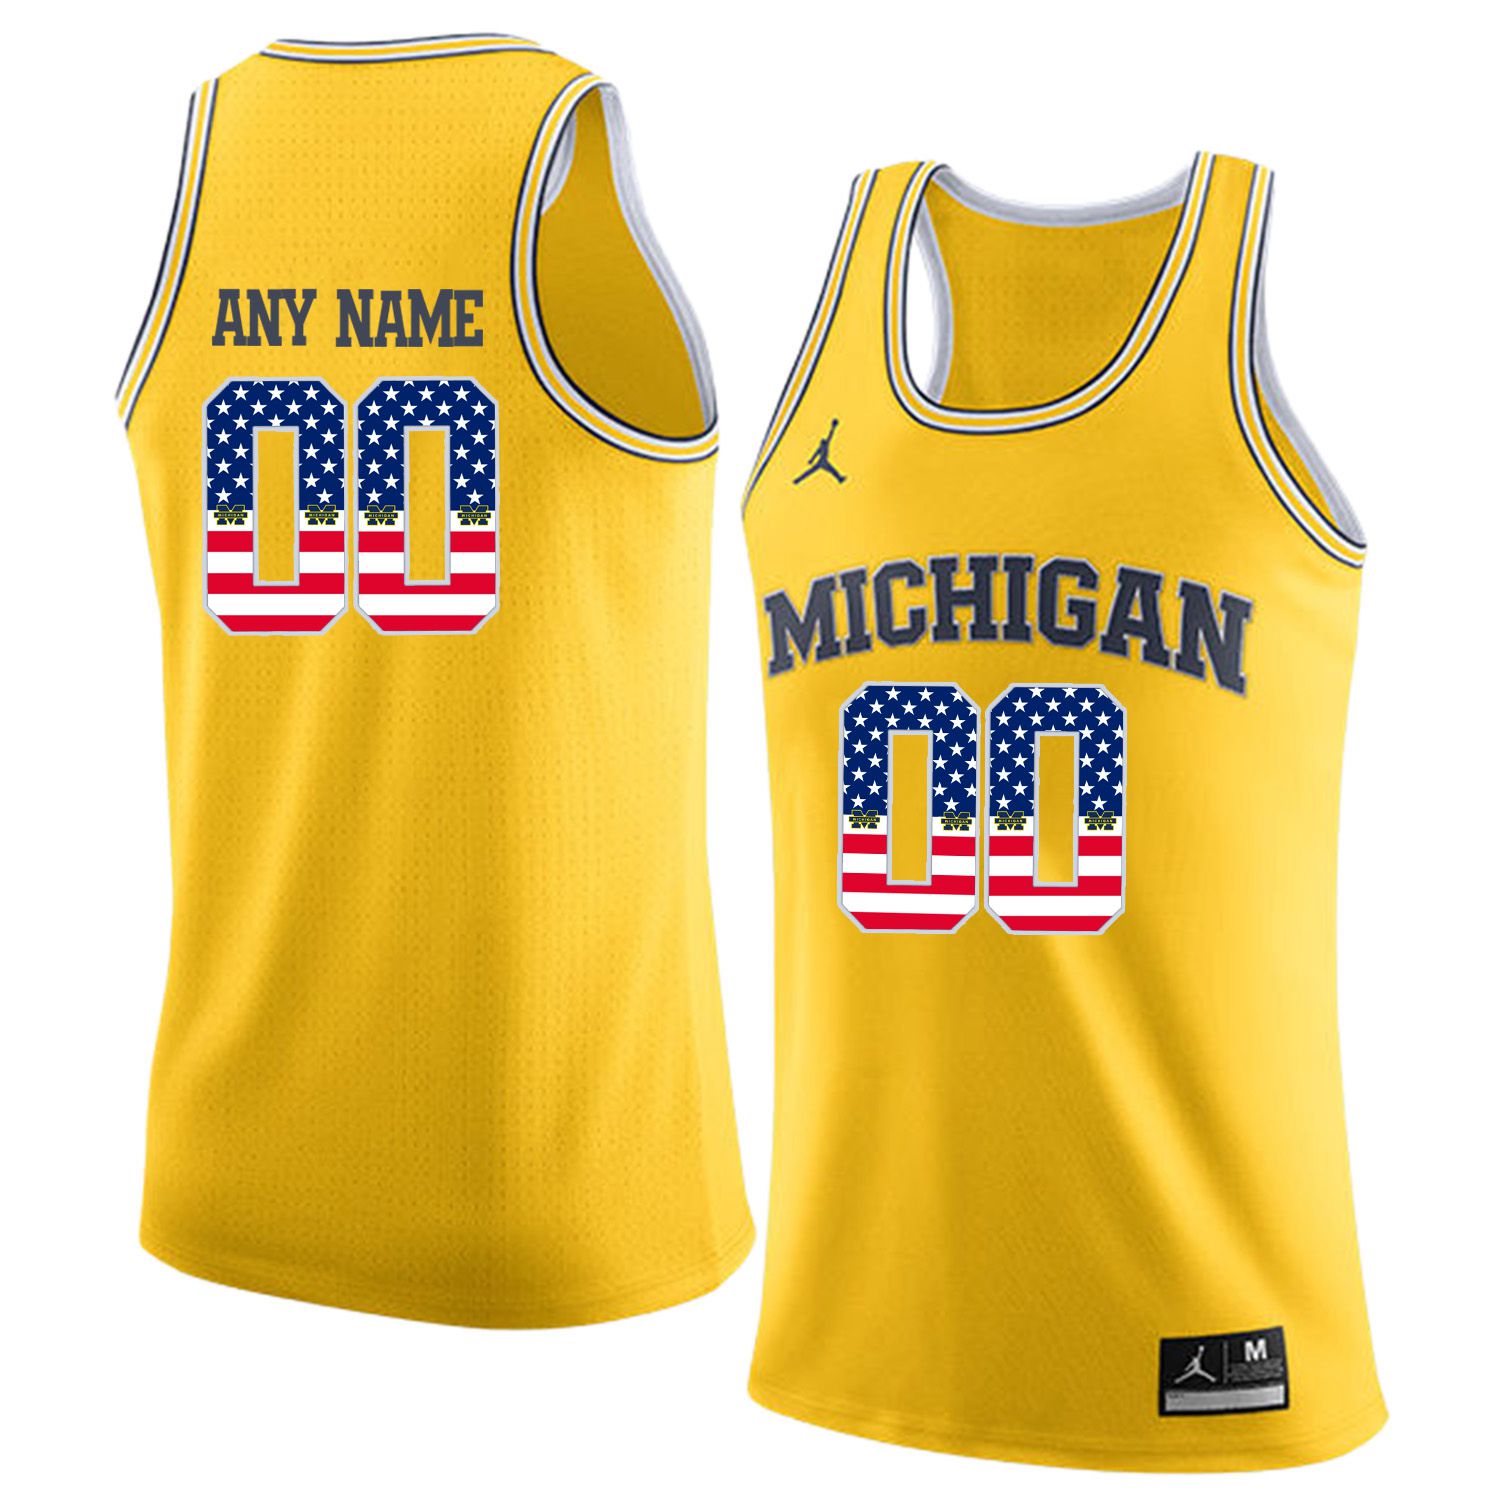 Men Jordan University of Michigan Basketball Yellow 00 Any name Flag Customized NCAA Jerseys